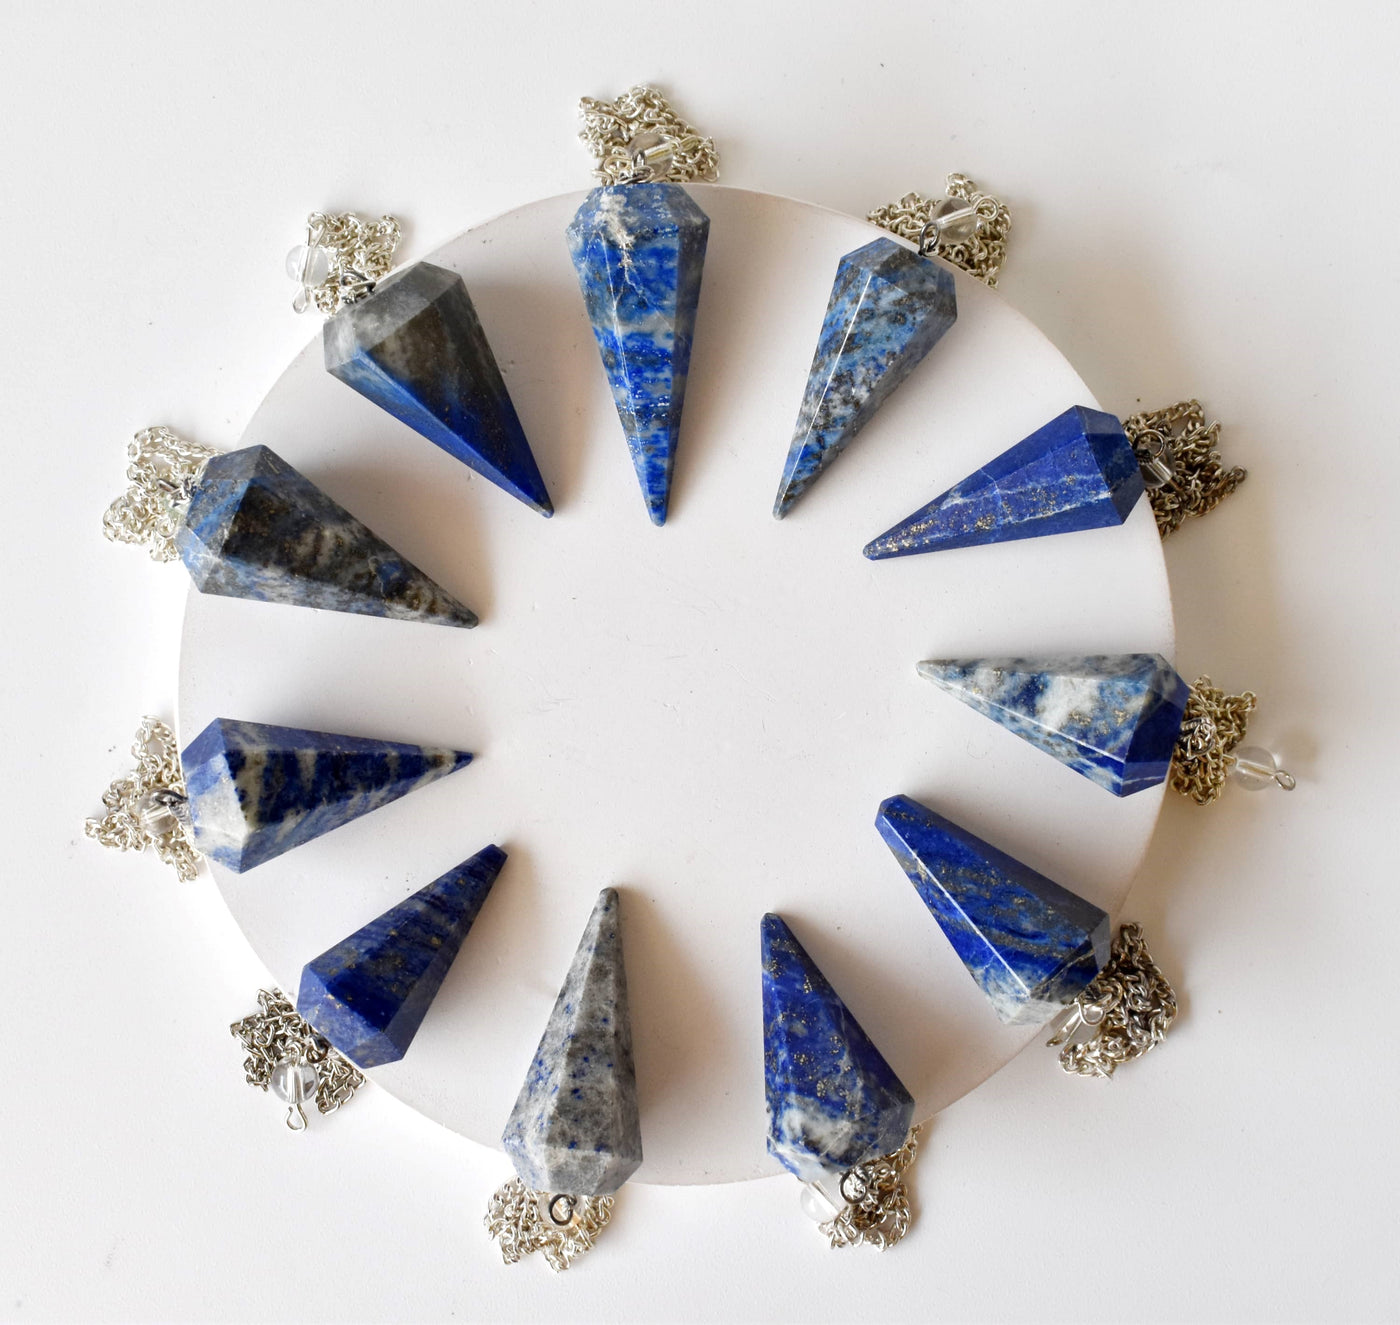 Lapis Lazuli Pendulum (Expansion and Inspiration)